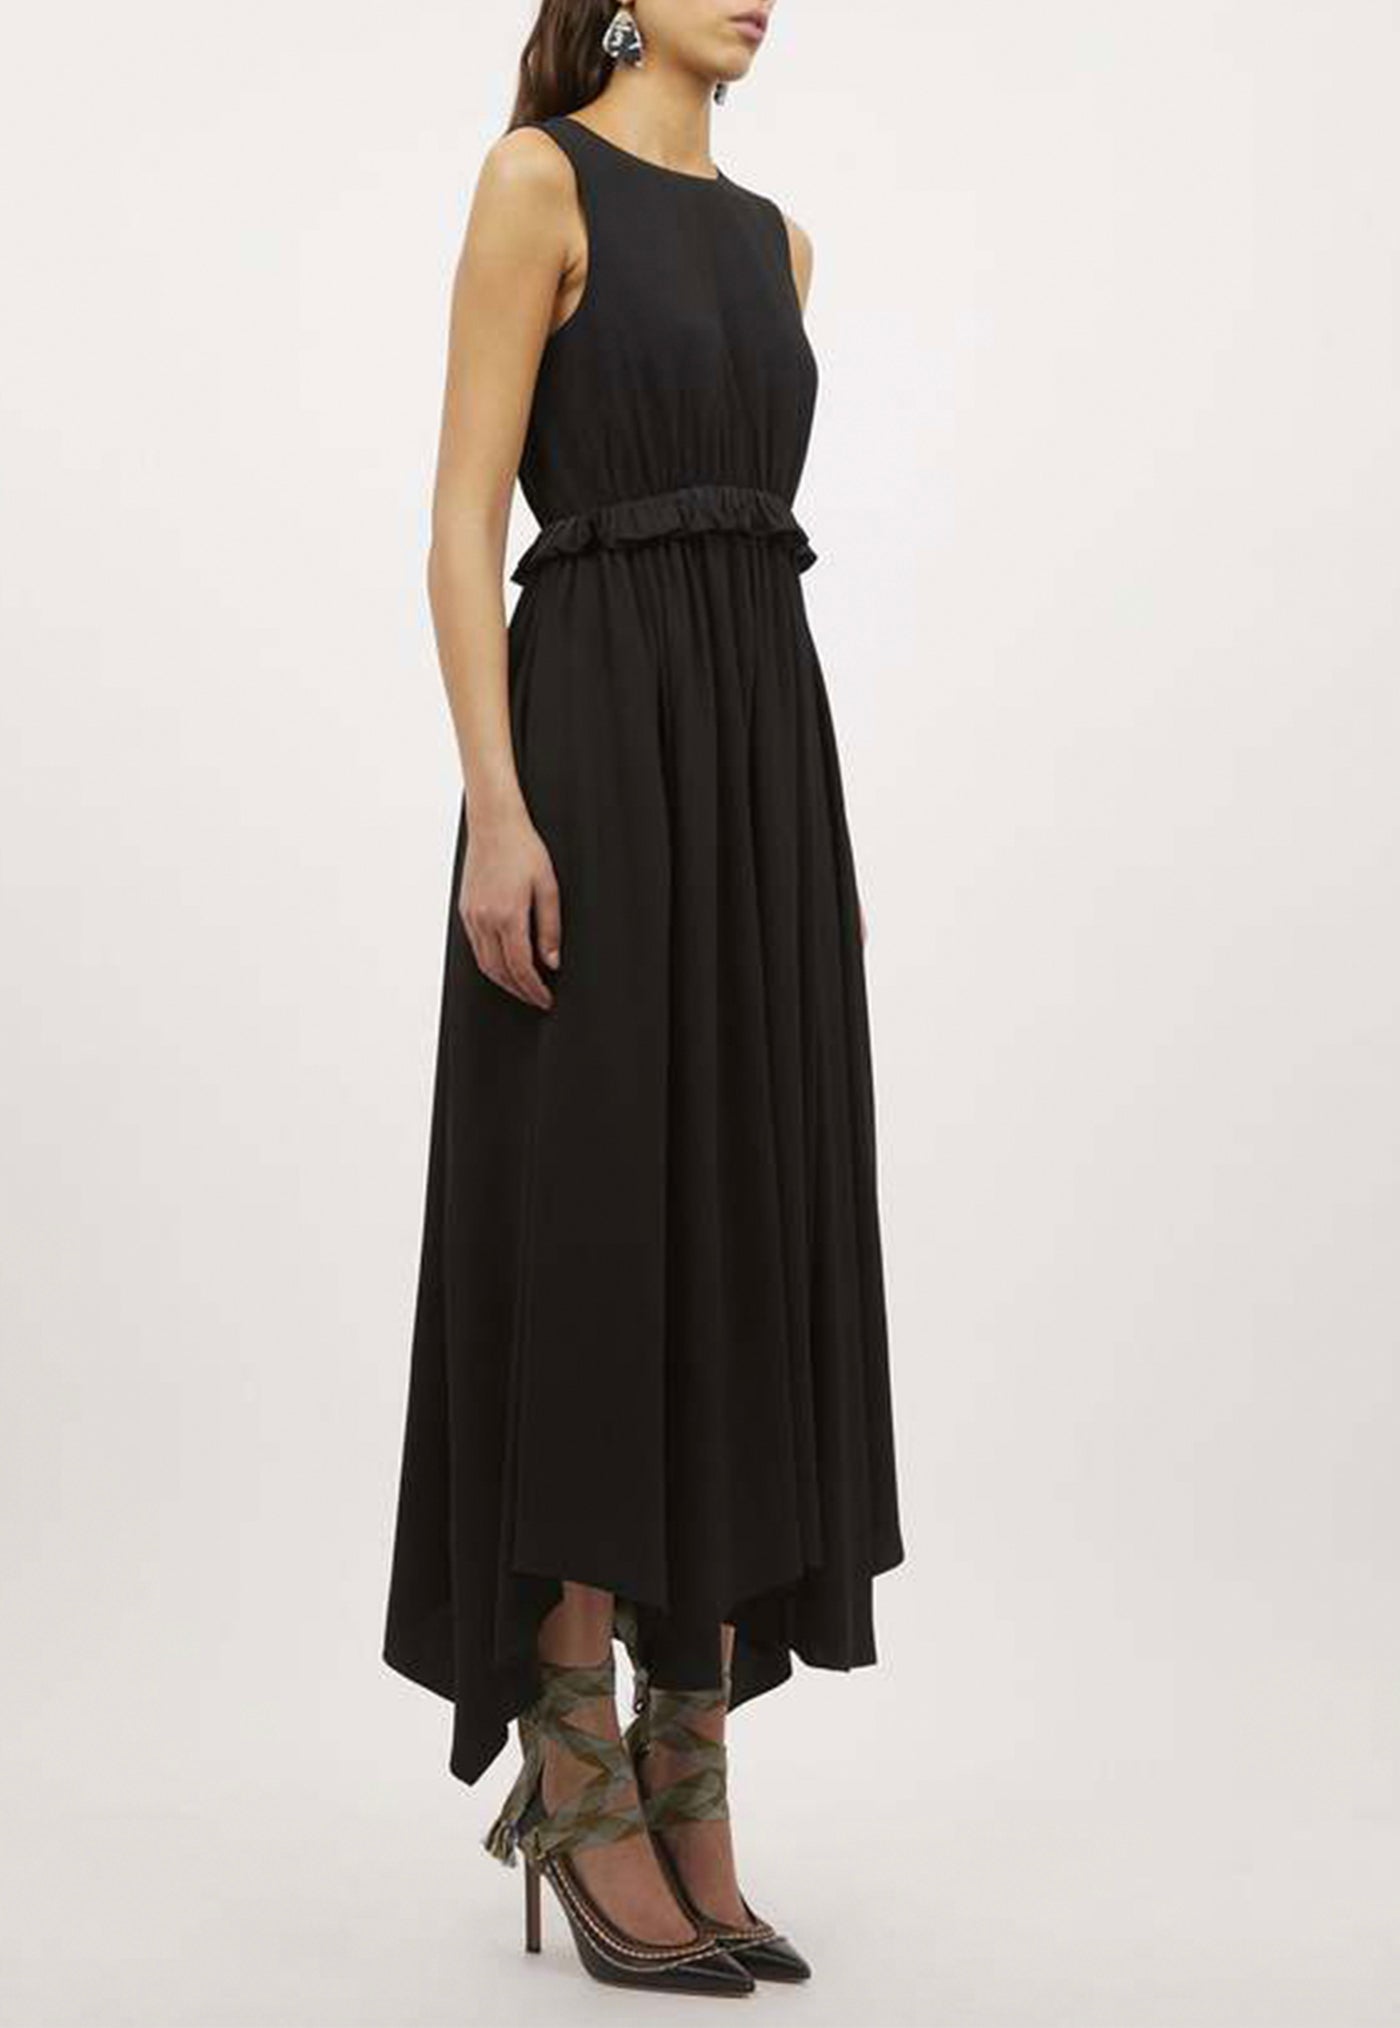 Evita Dress - Noir sold by Angel Divine